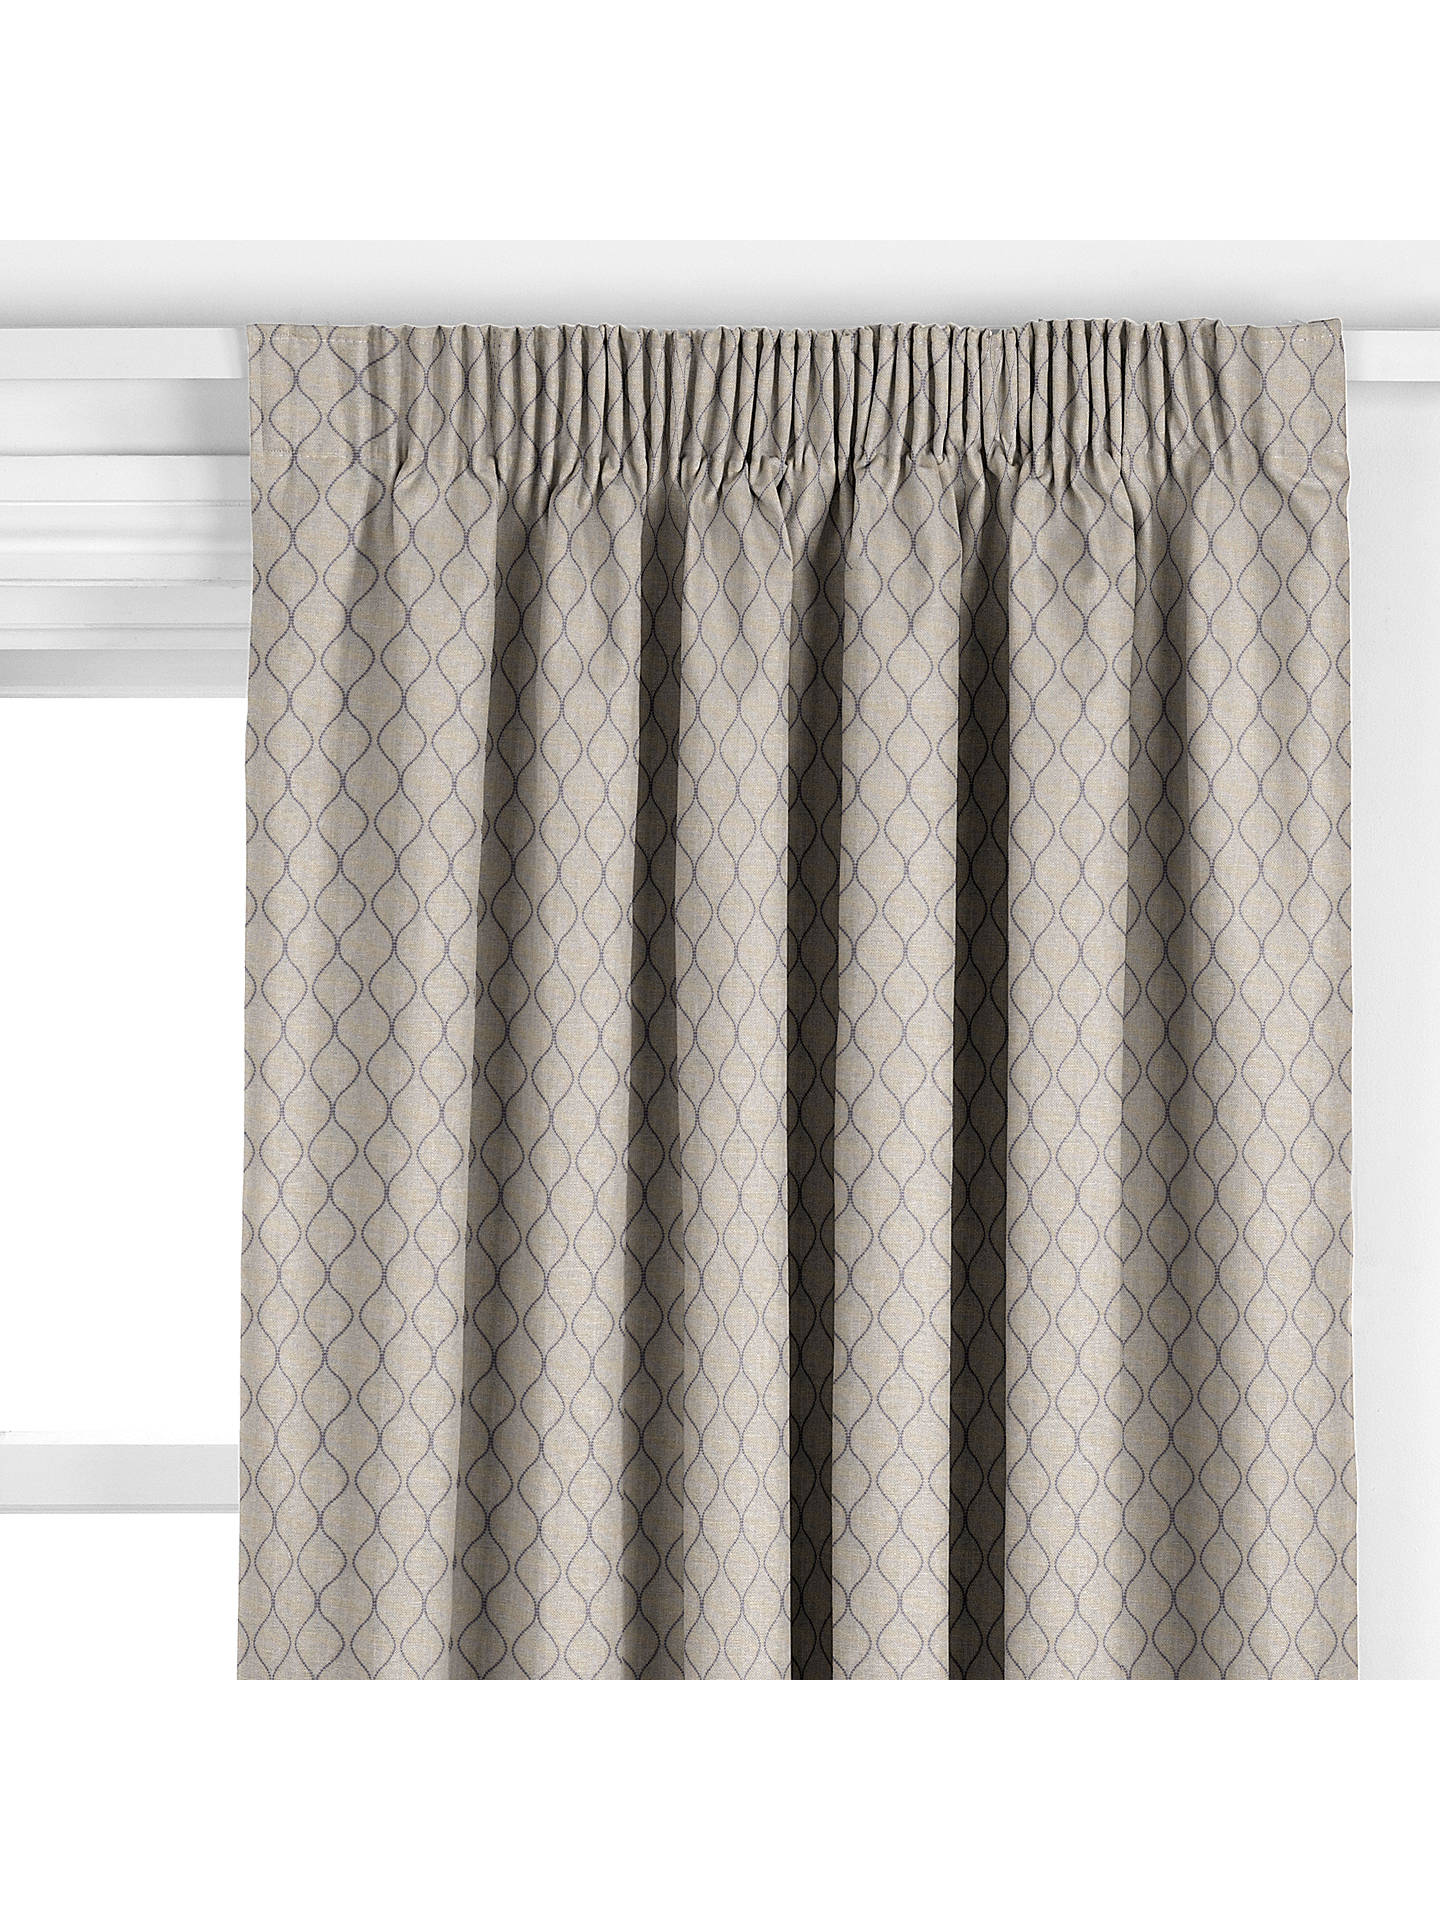 John Lewis Ellewood Knot Made to Measure Curtains, Denim